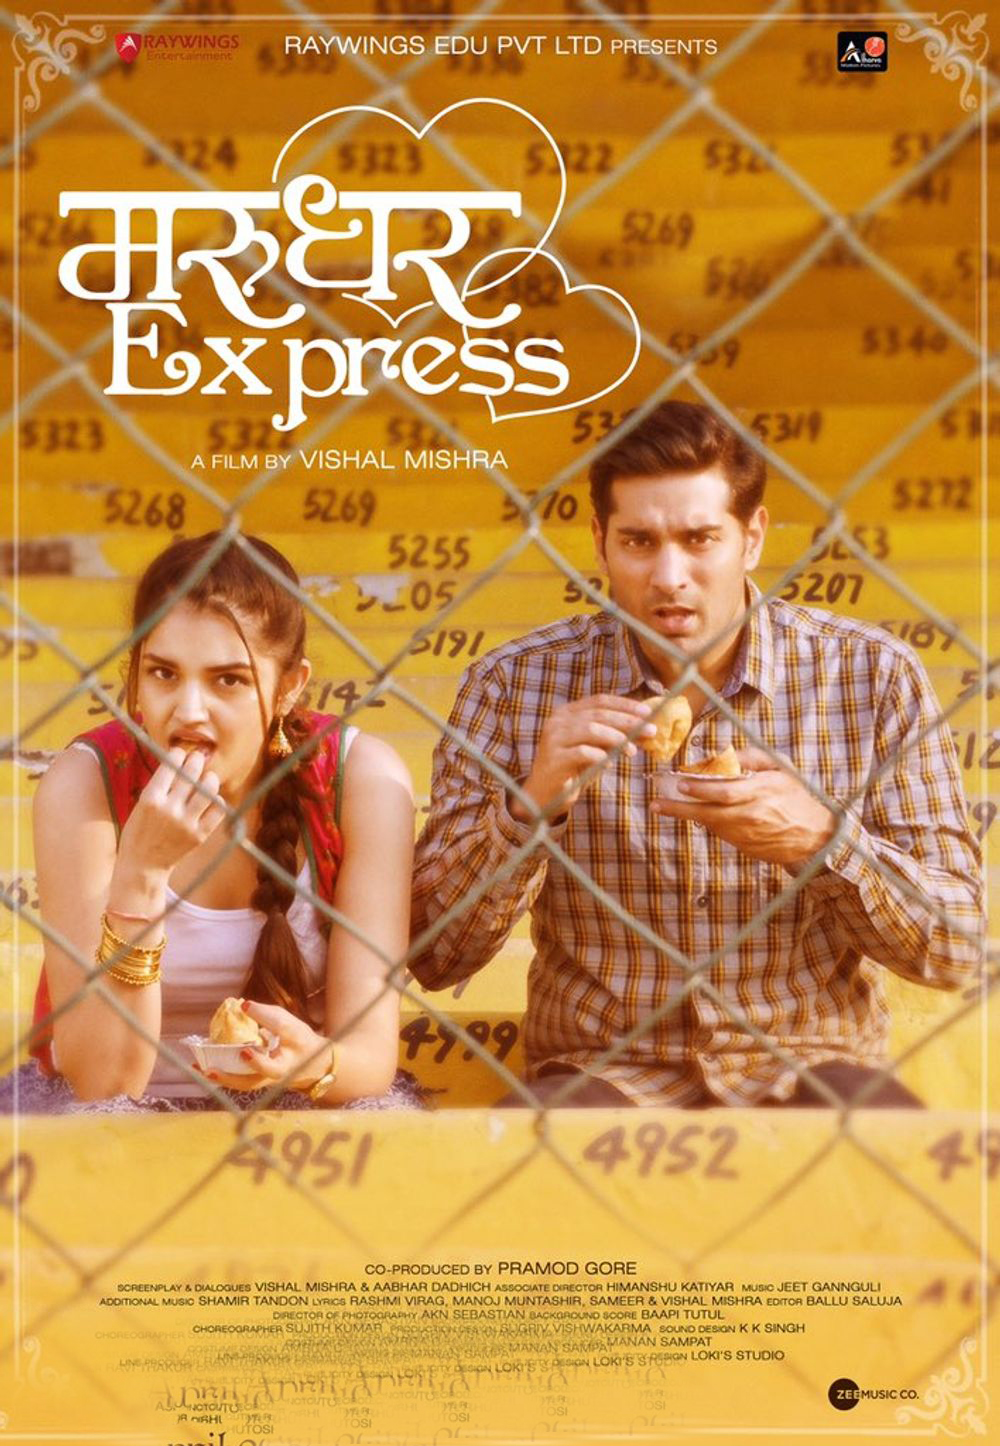 Marudhar Express Movie Review